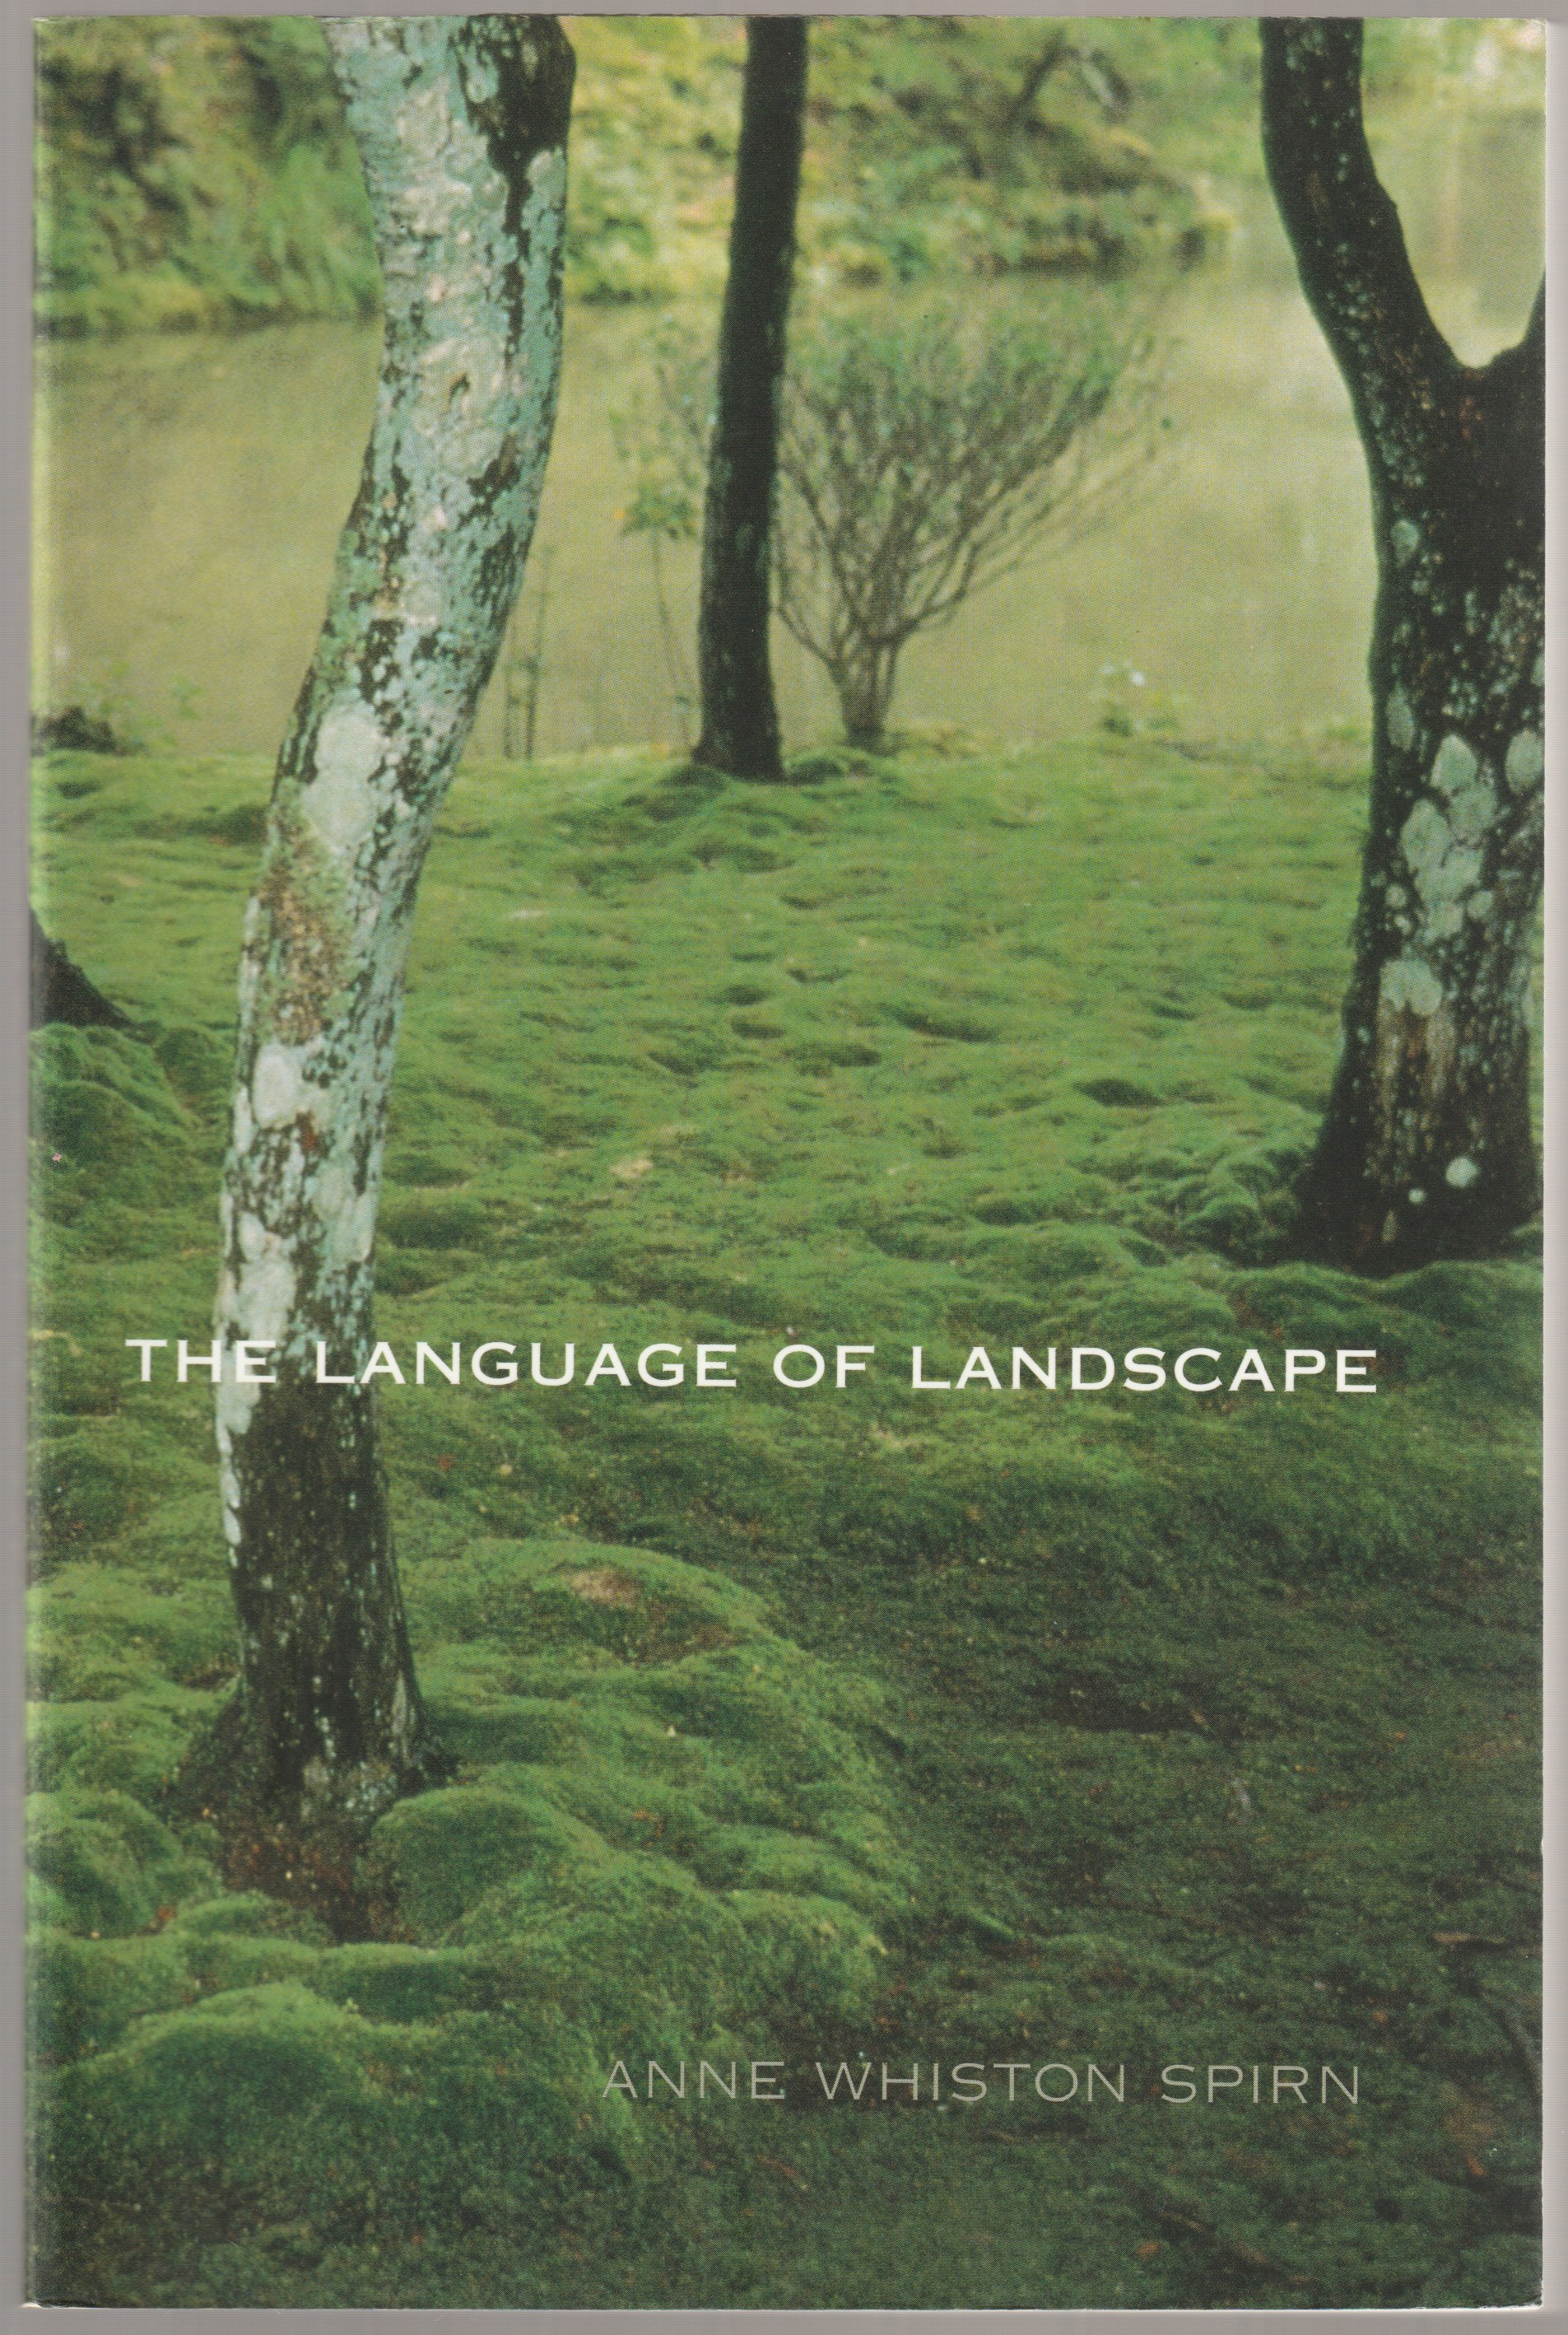 The language of landscape.